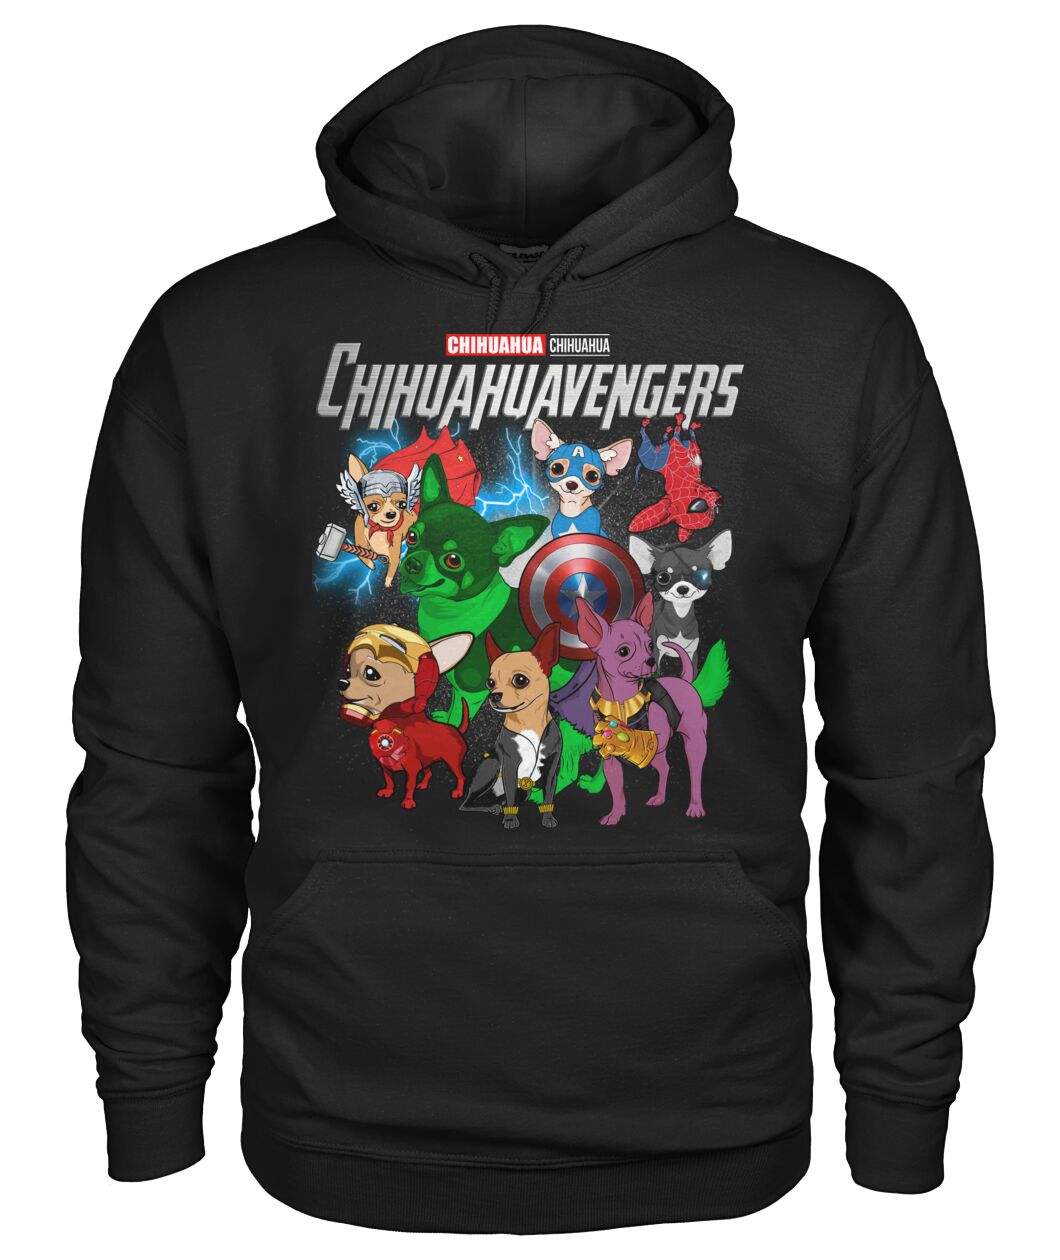 Chihuahuavengers 3D Hoodie, Shirt 8